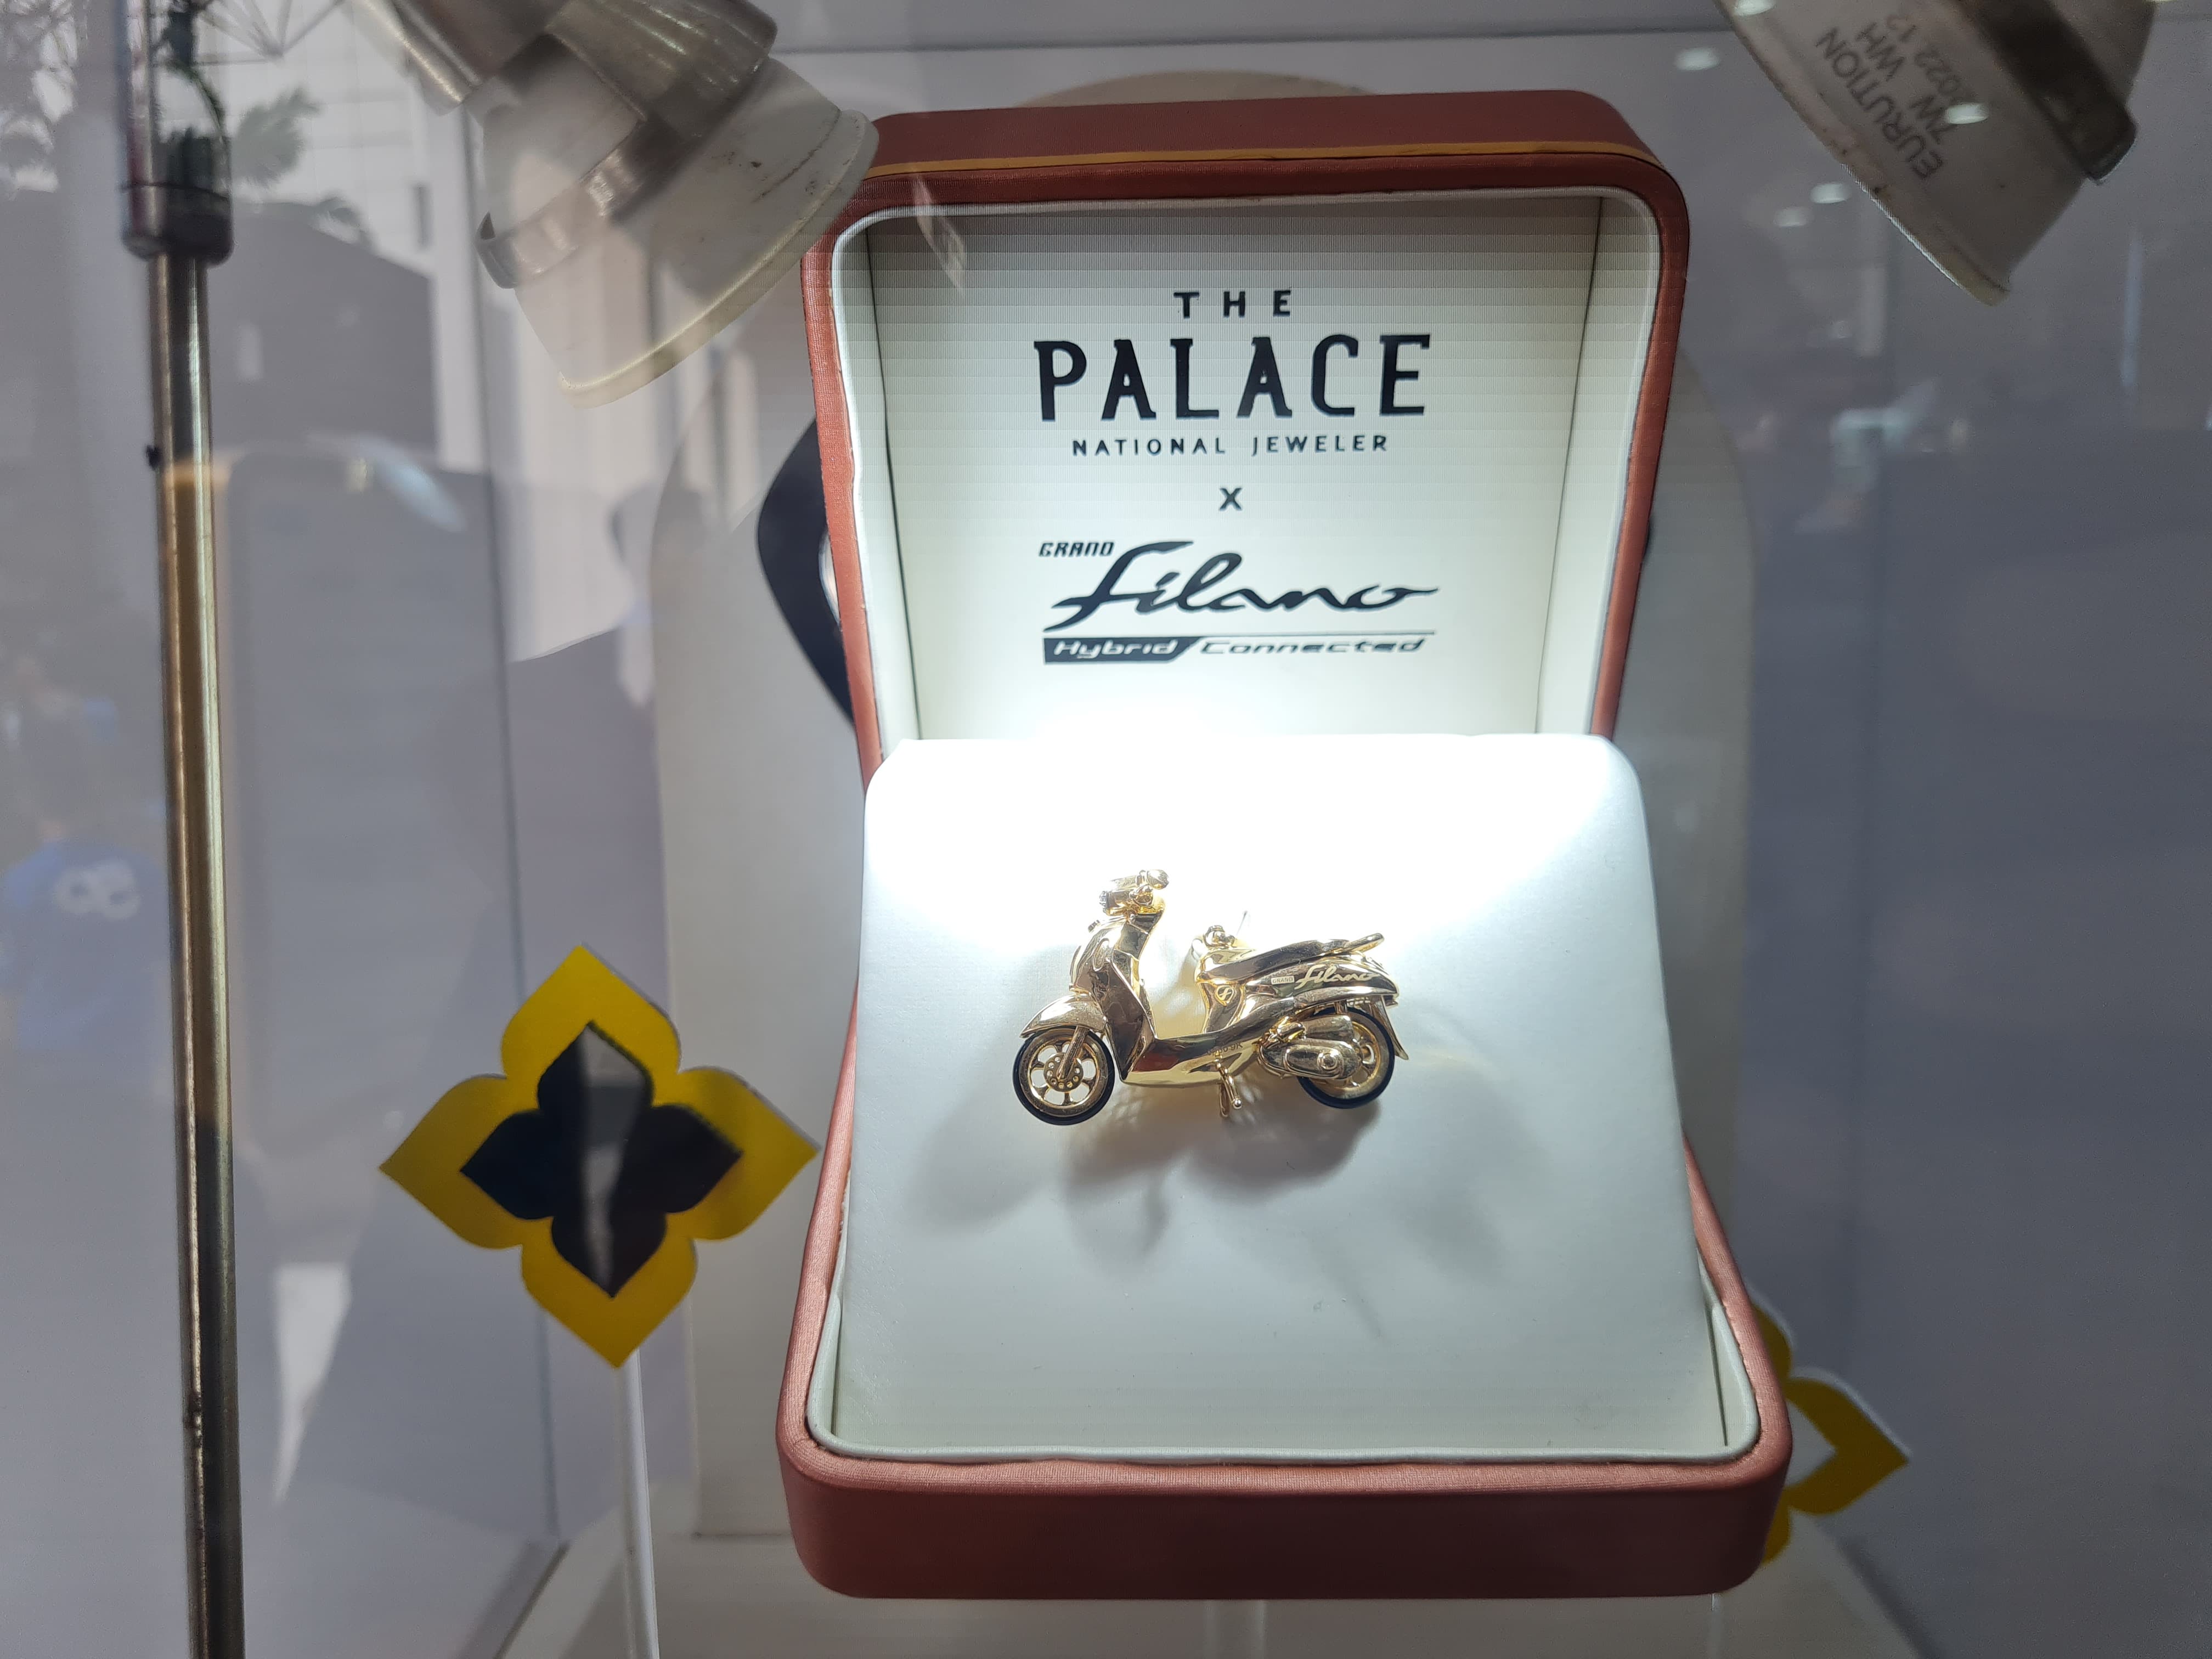 Yamaha Grand Filano x The Palace Jeweler, Hadirkan Pendant Senilai Rp 27 Jutaan Gratis! Ini Cara Mendapatkannya